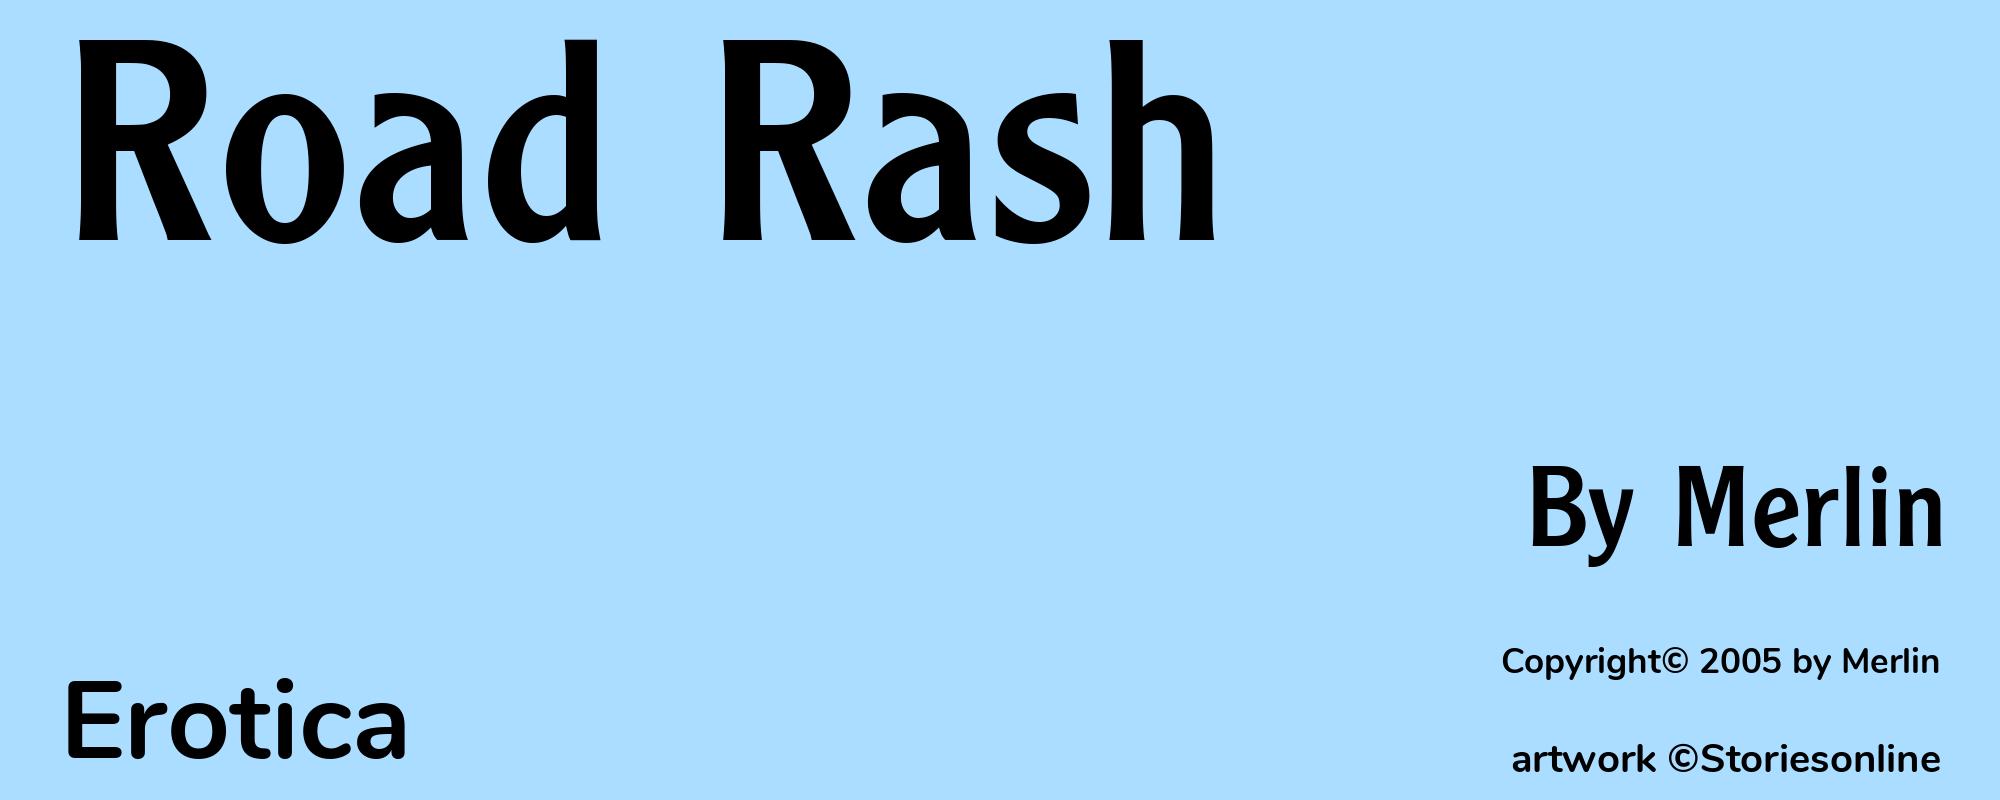 Road Rash - Cover